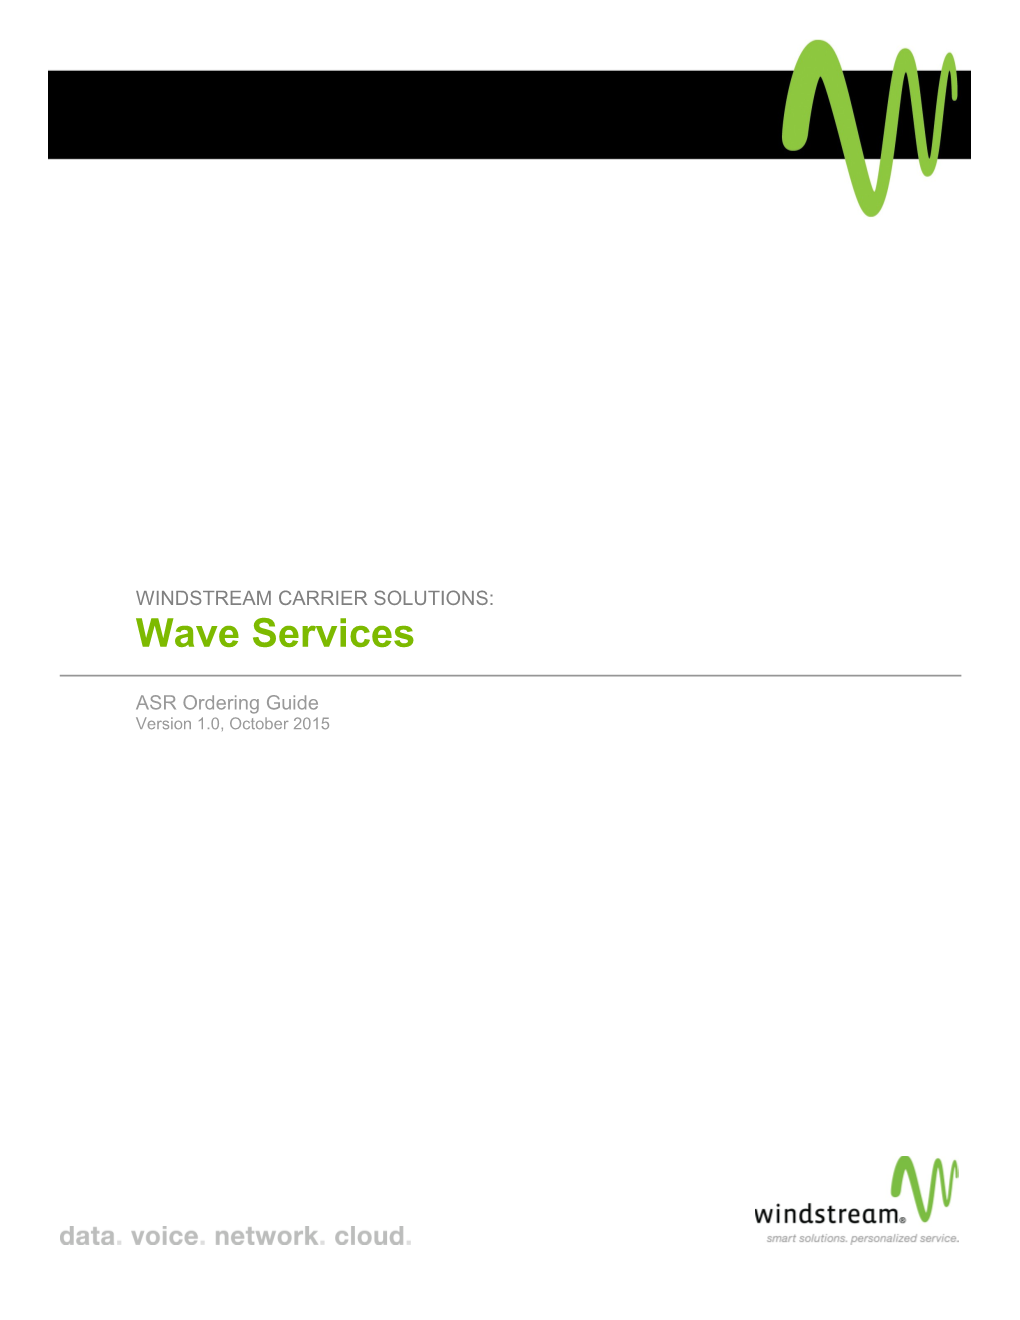 Windstream S Dense Wave Division Multiplexing (DWDM) Wavelength Service ( Wave ) Provides